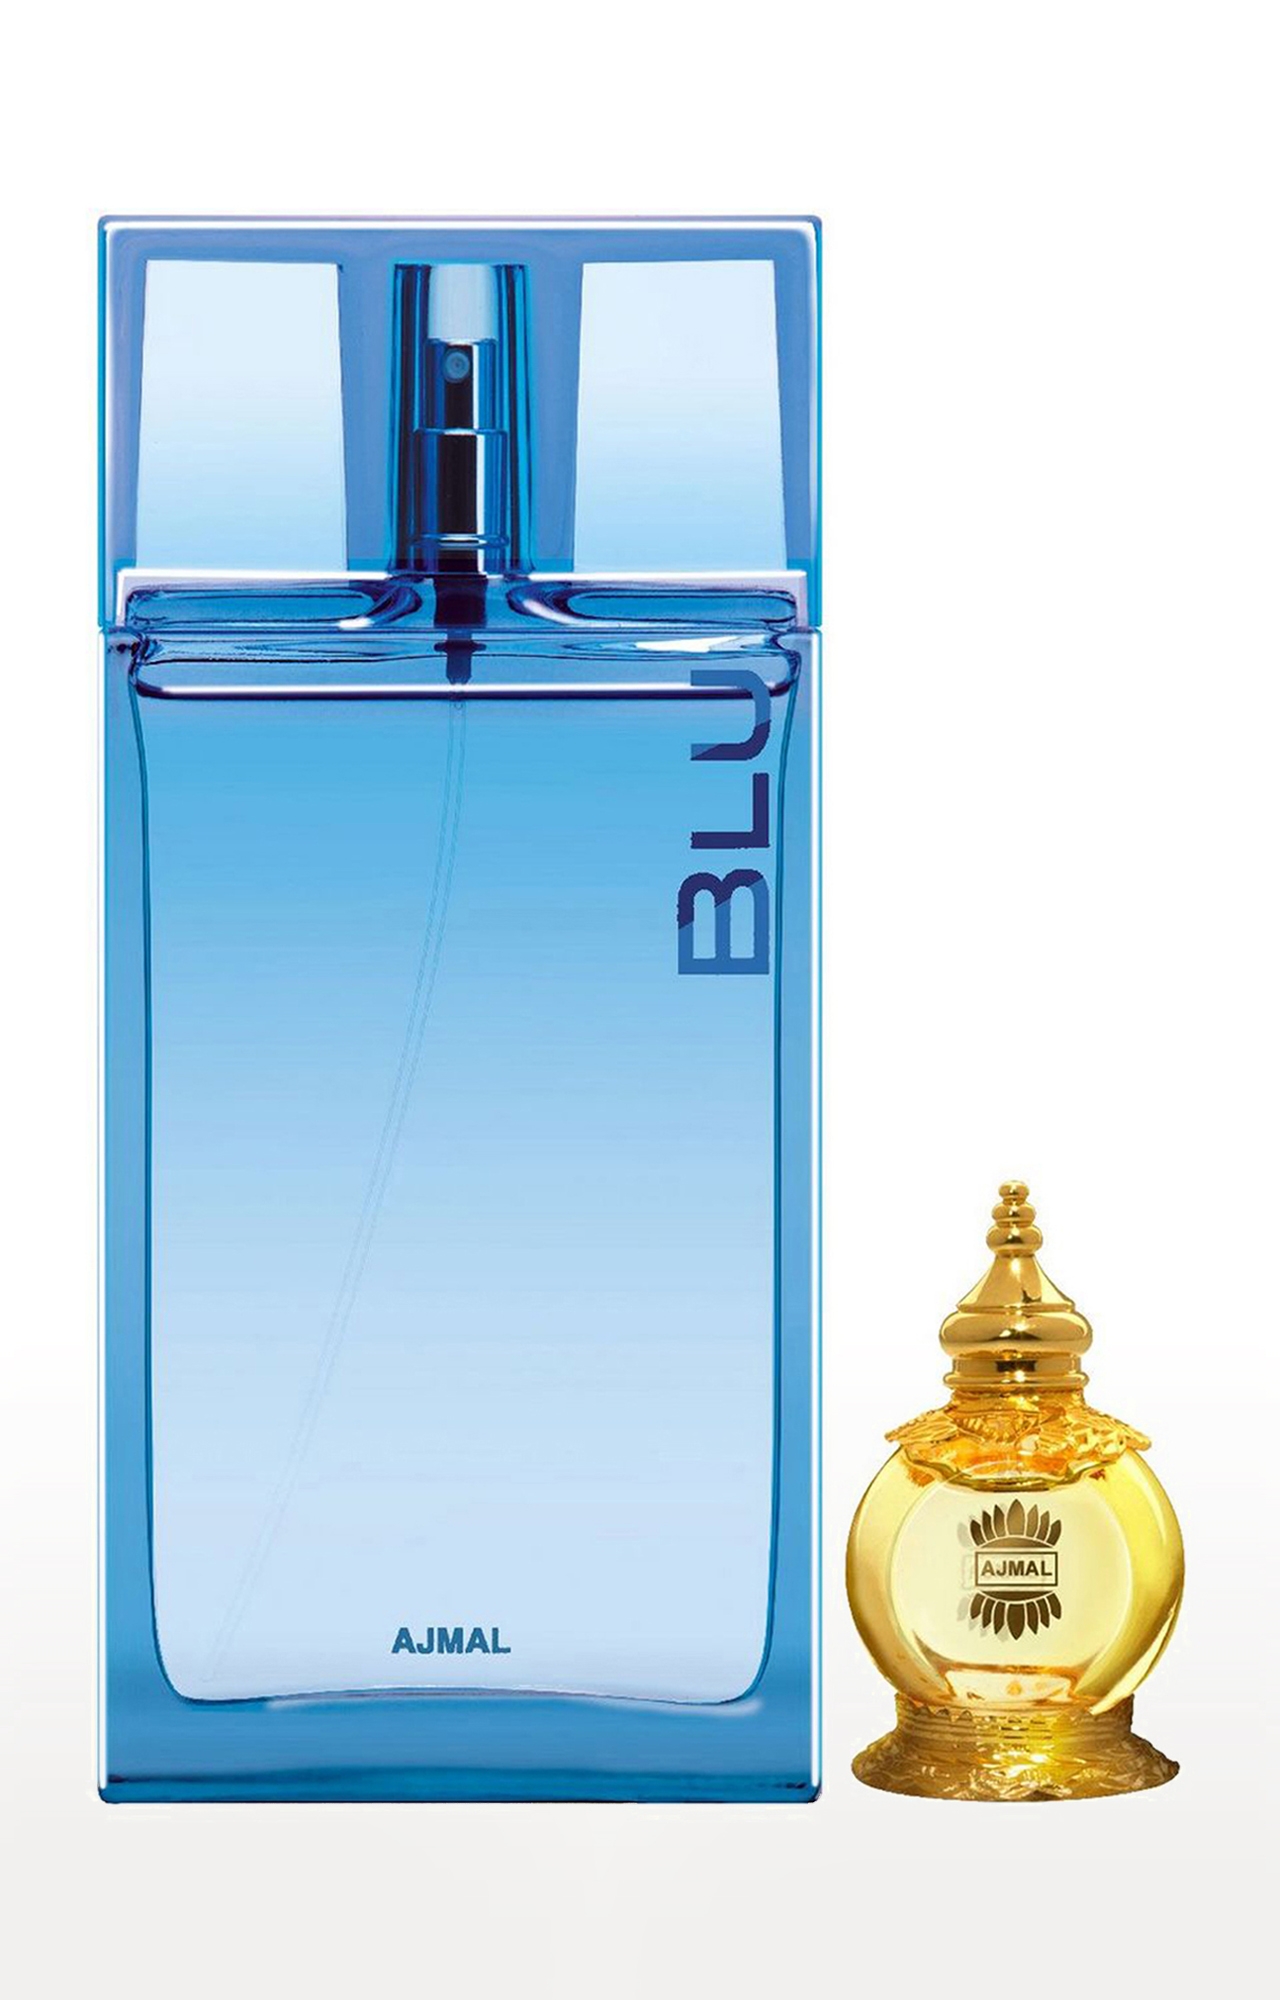 Ajmal | Ajmal Blu EDP Aquatic Perfume 90ml for Men and Mukhallat AL Wafa Concentrated Perfume Oil Oriental Musky Alcohol-free Attar 12ml for Unisex